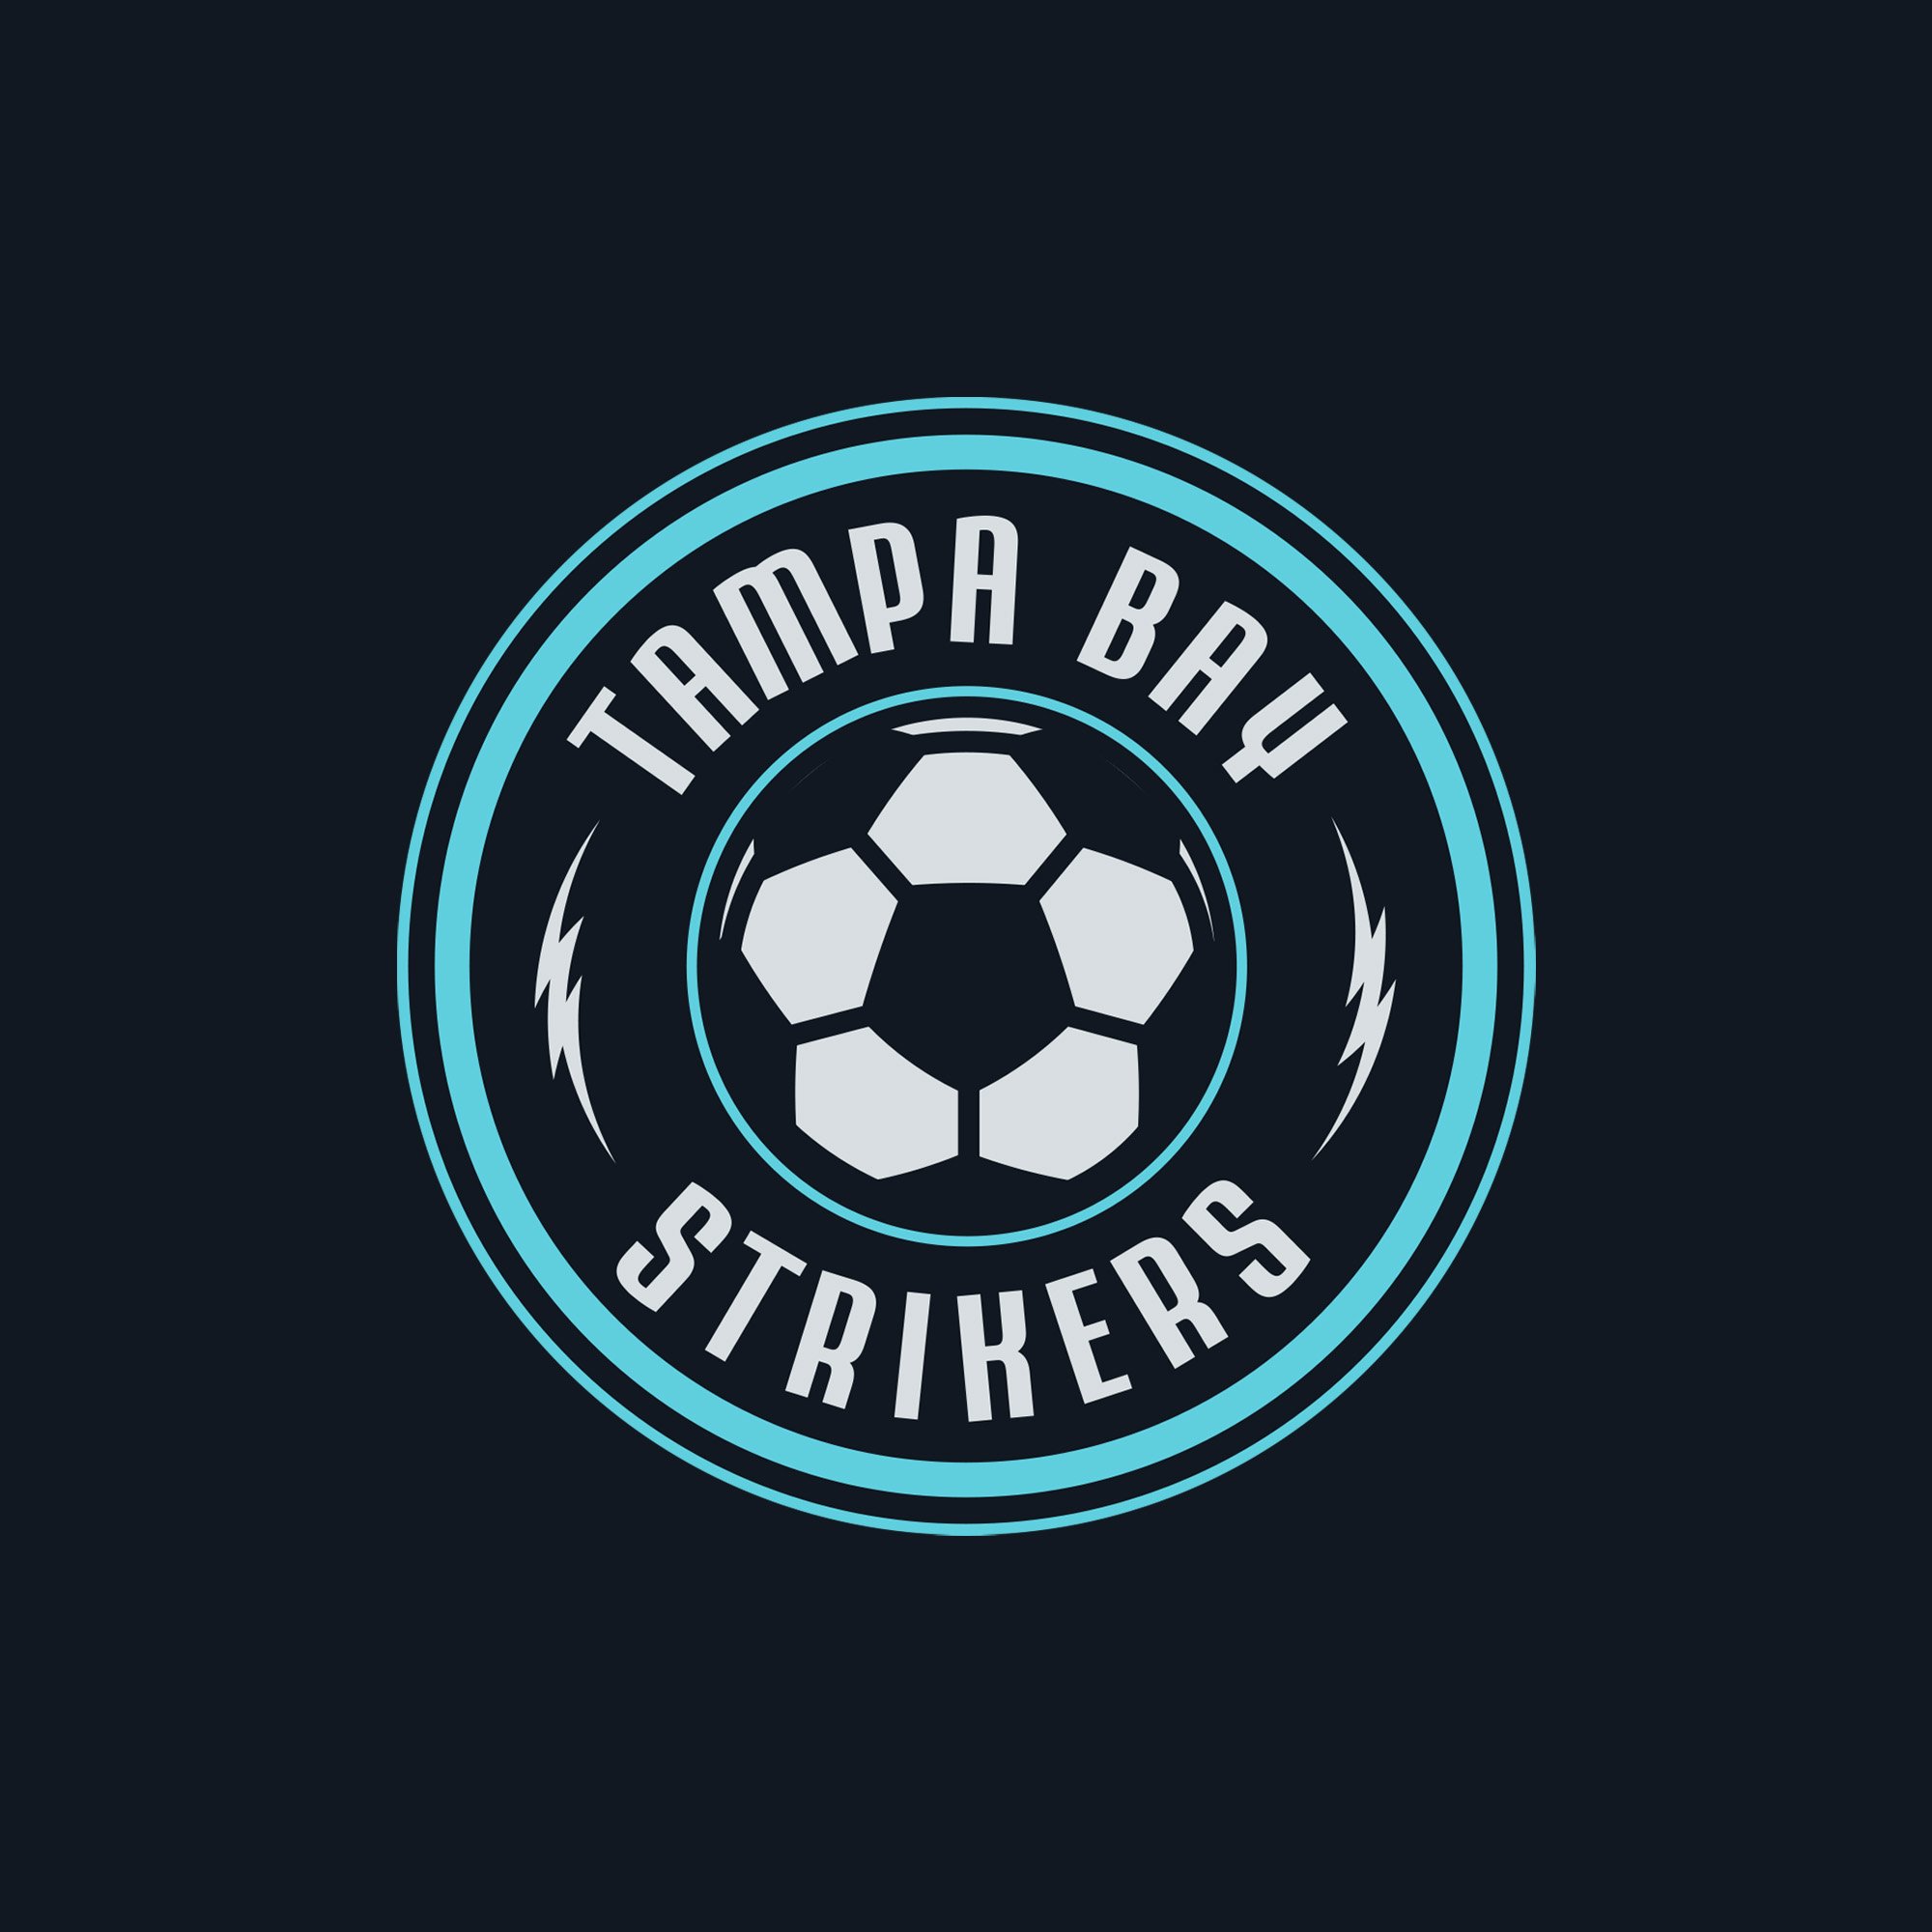 Donald Bunney Graphic Design - Tampa Bay Strikers Logo - The Purpose Process (Copy)